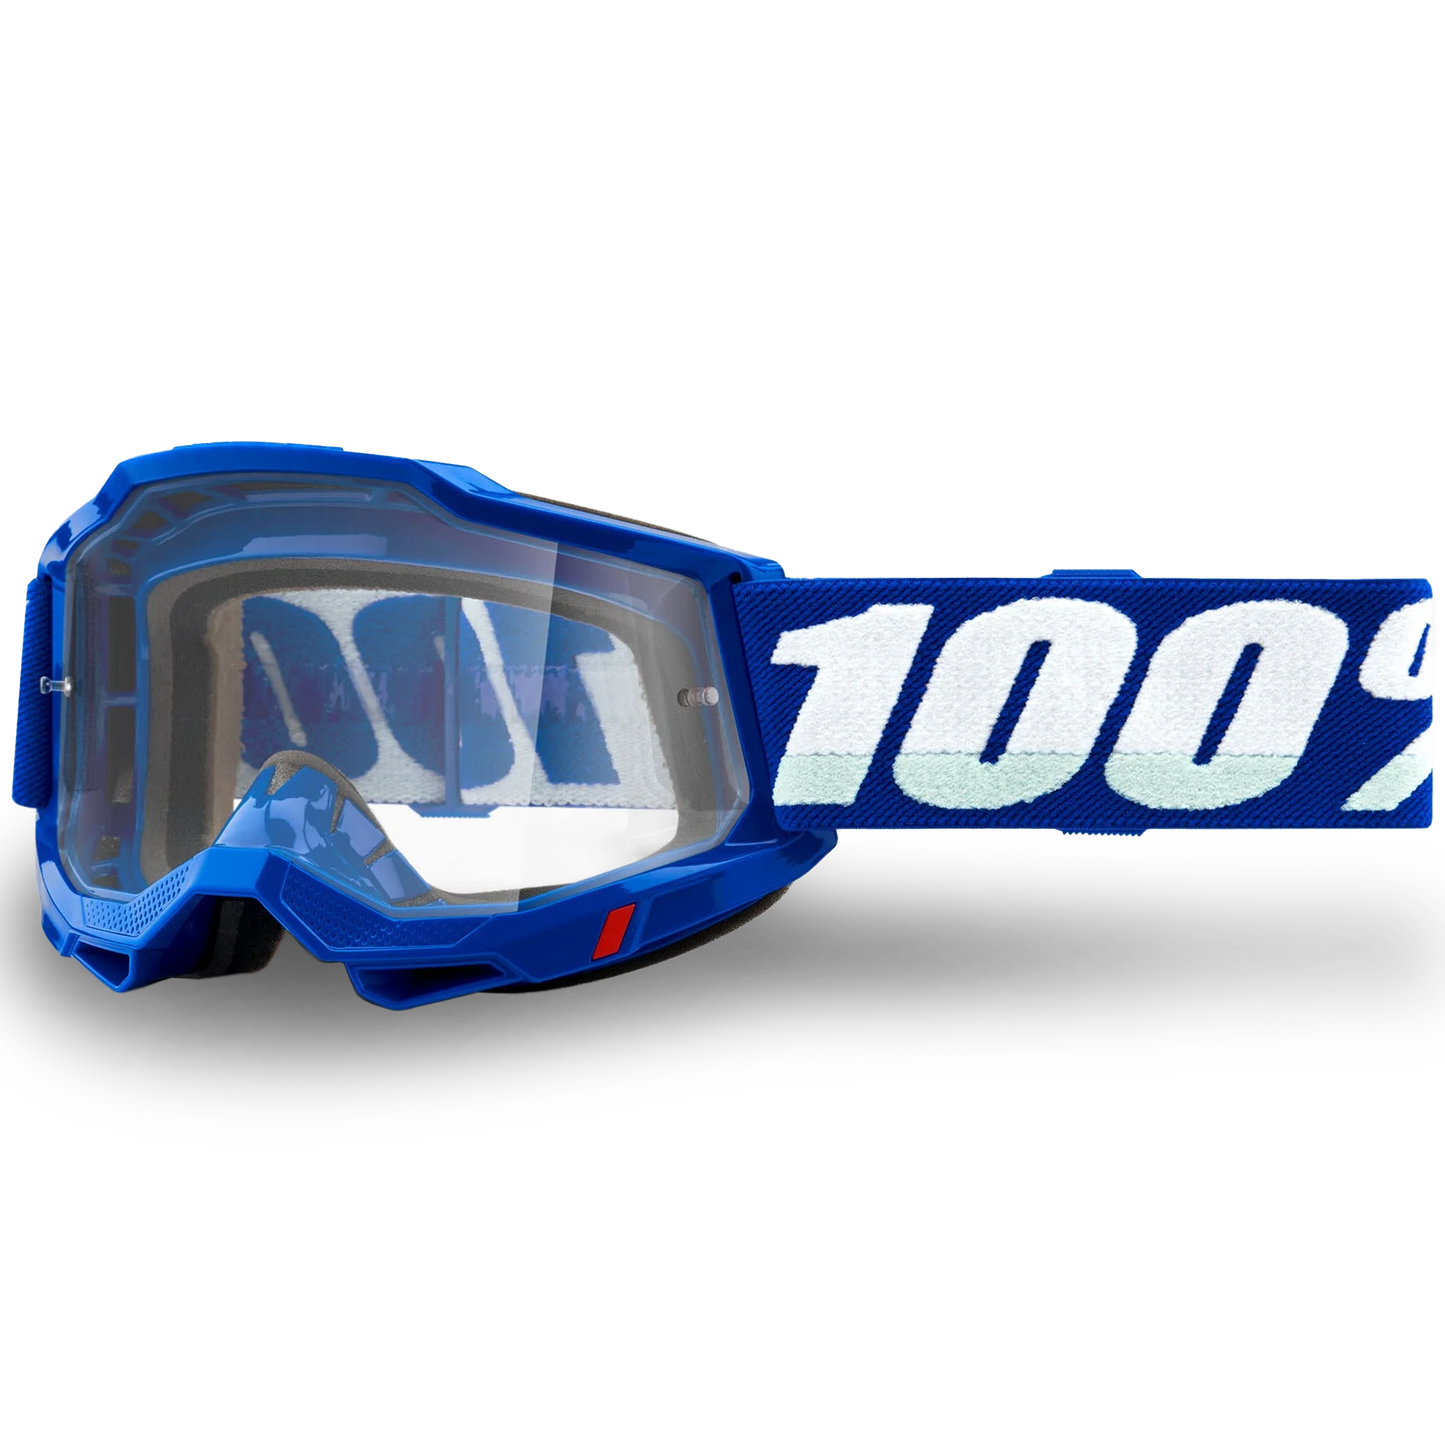 100% Accuri 2 Goggles - Blue (Mirror Blue Lens)